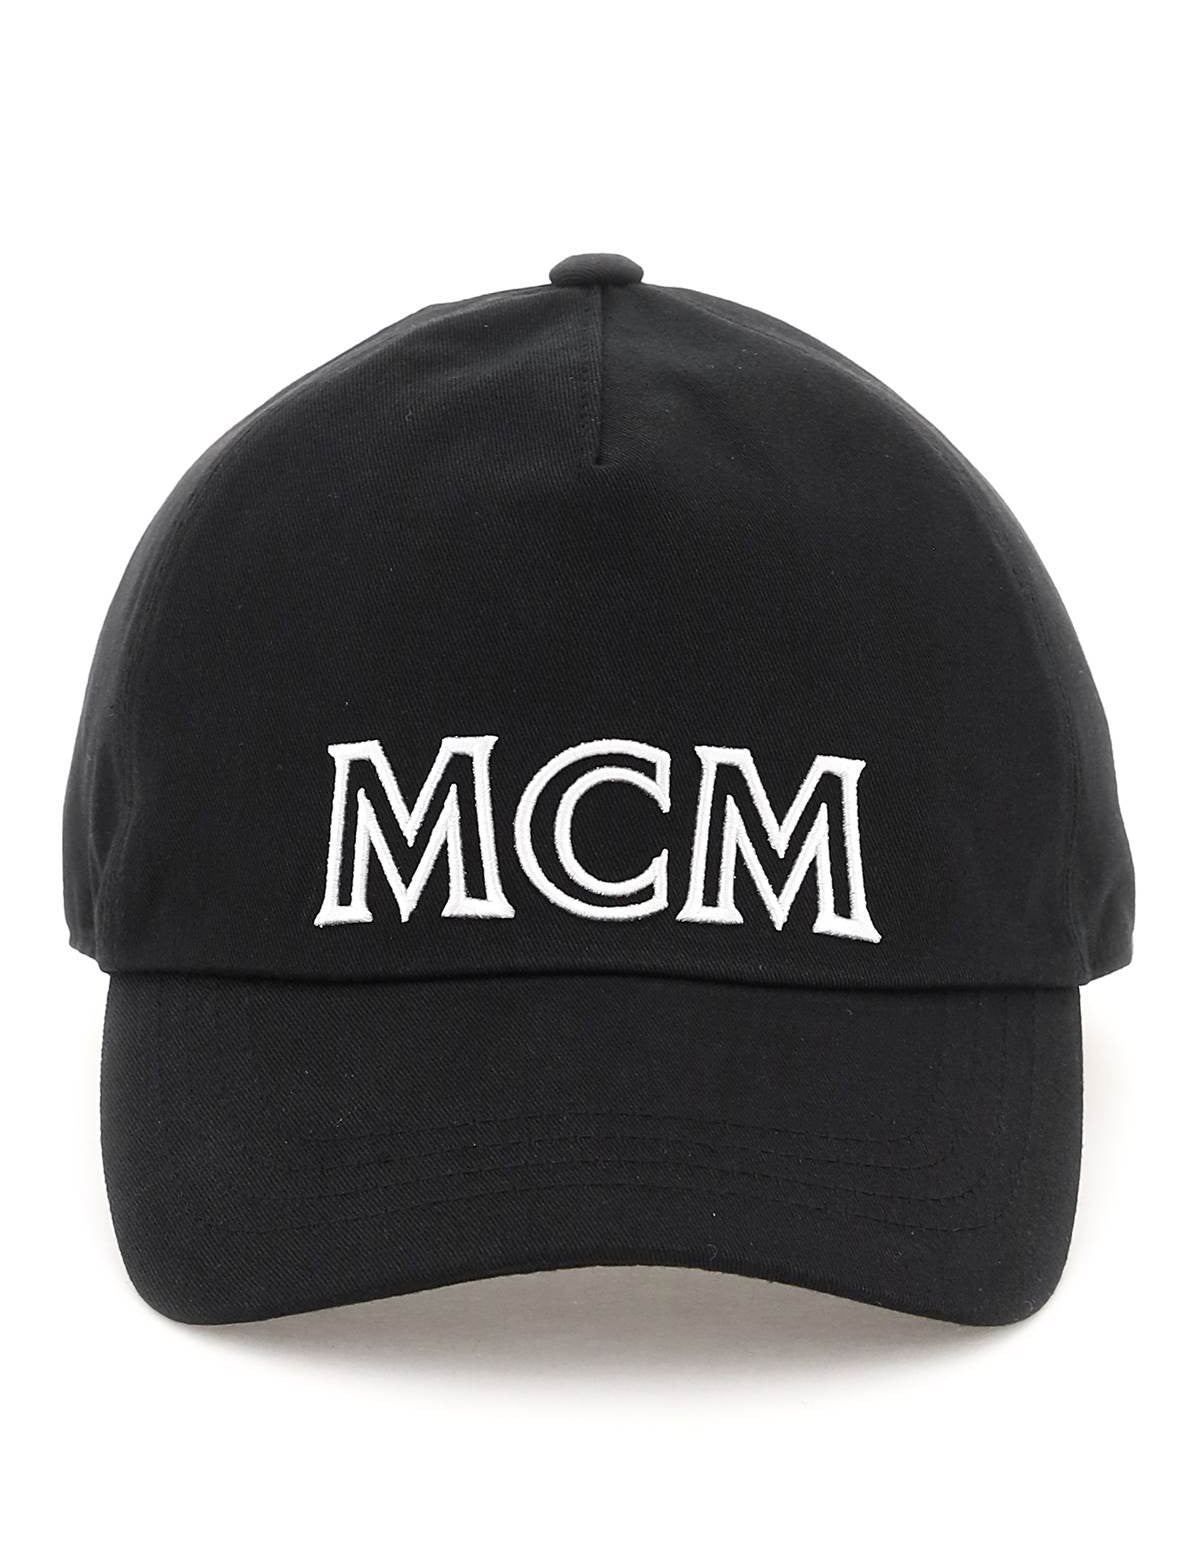 mcm-baseball-cap-with-embroidered-logo.jpg